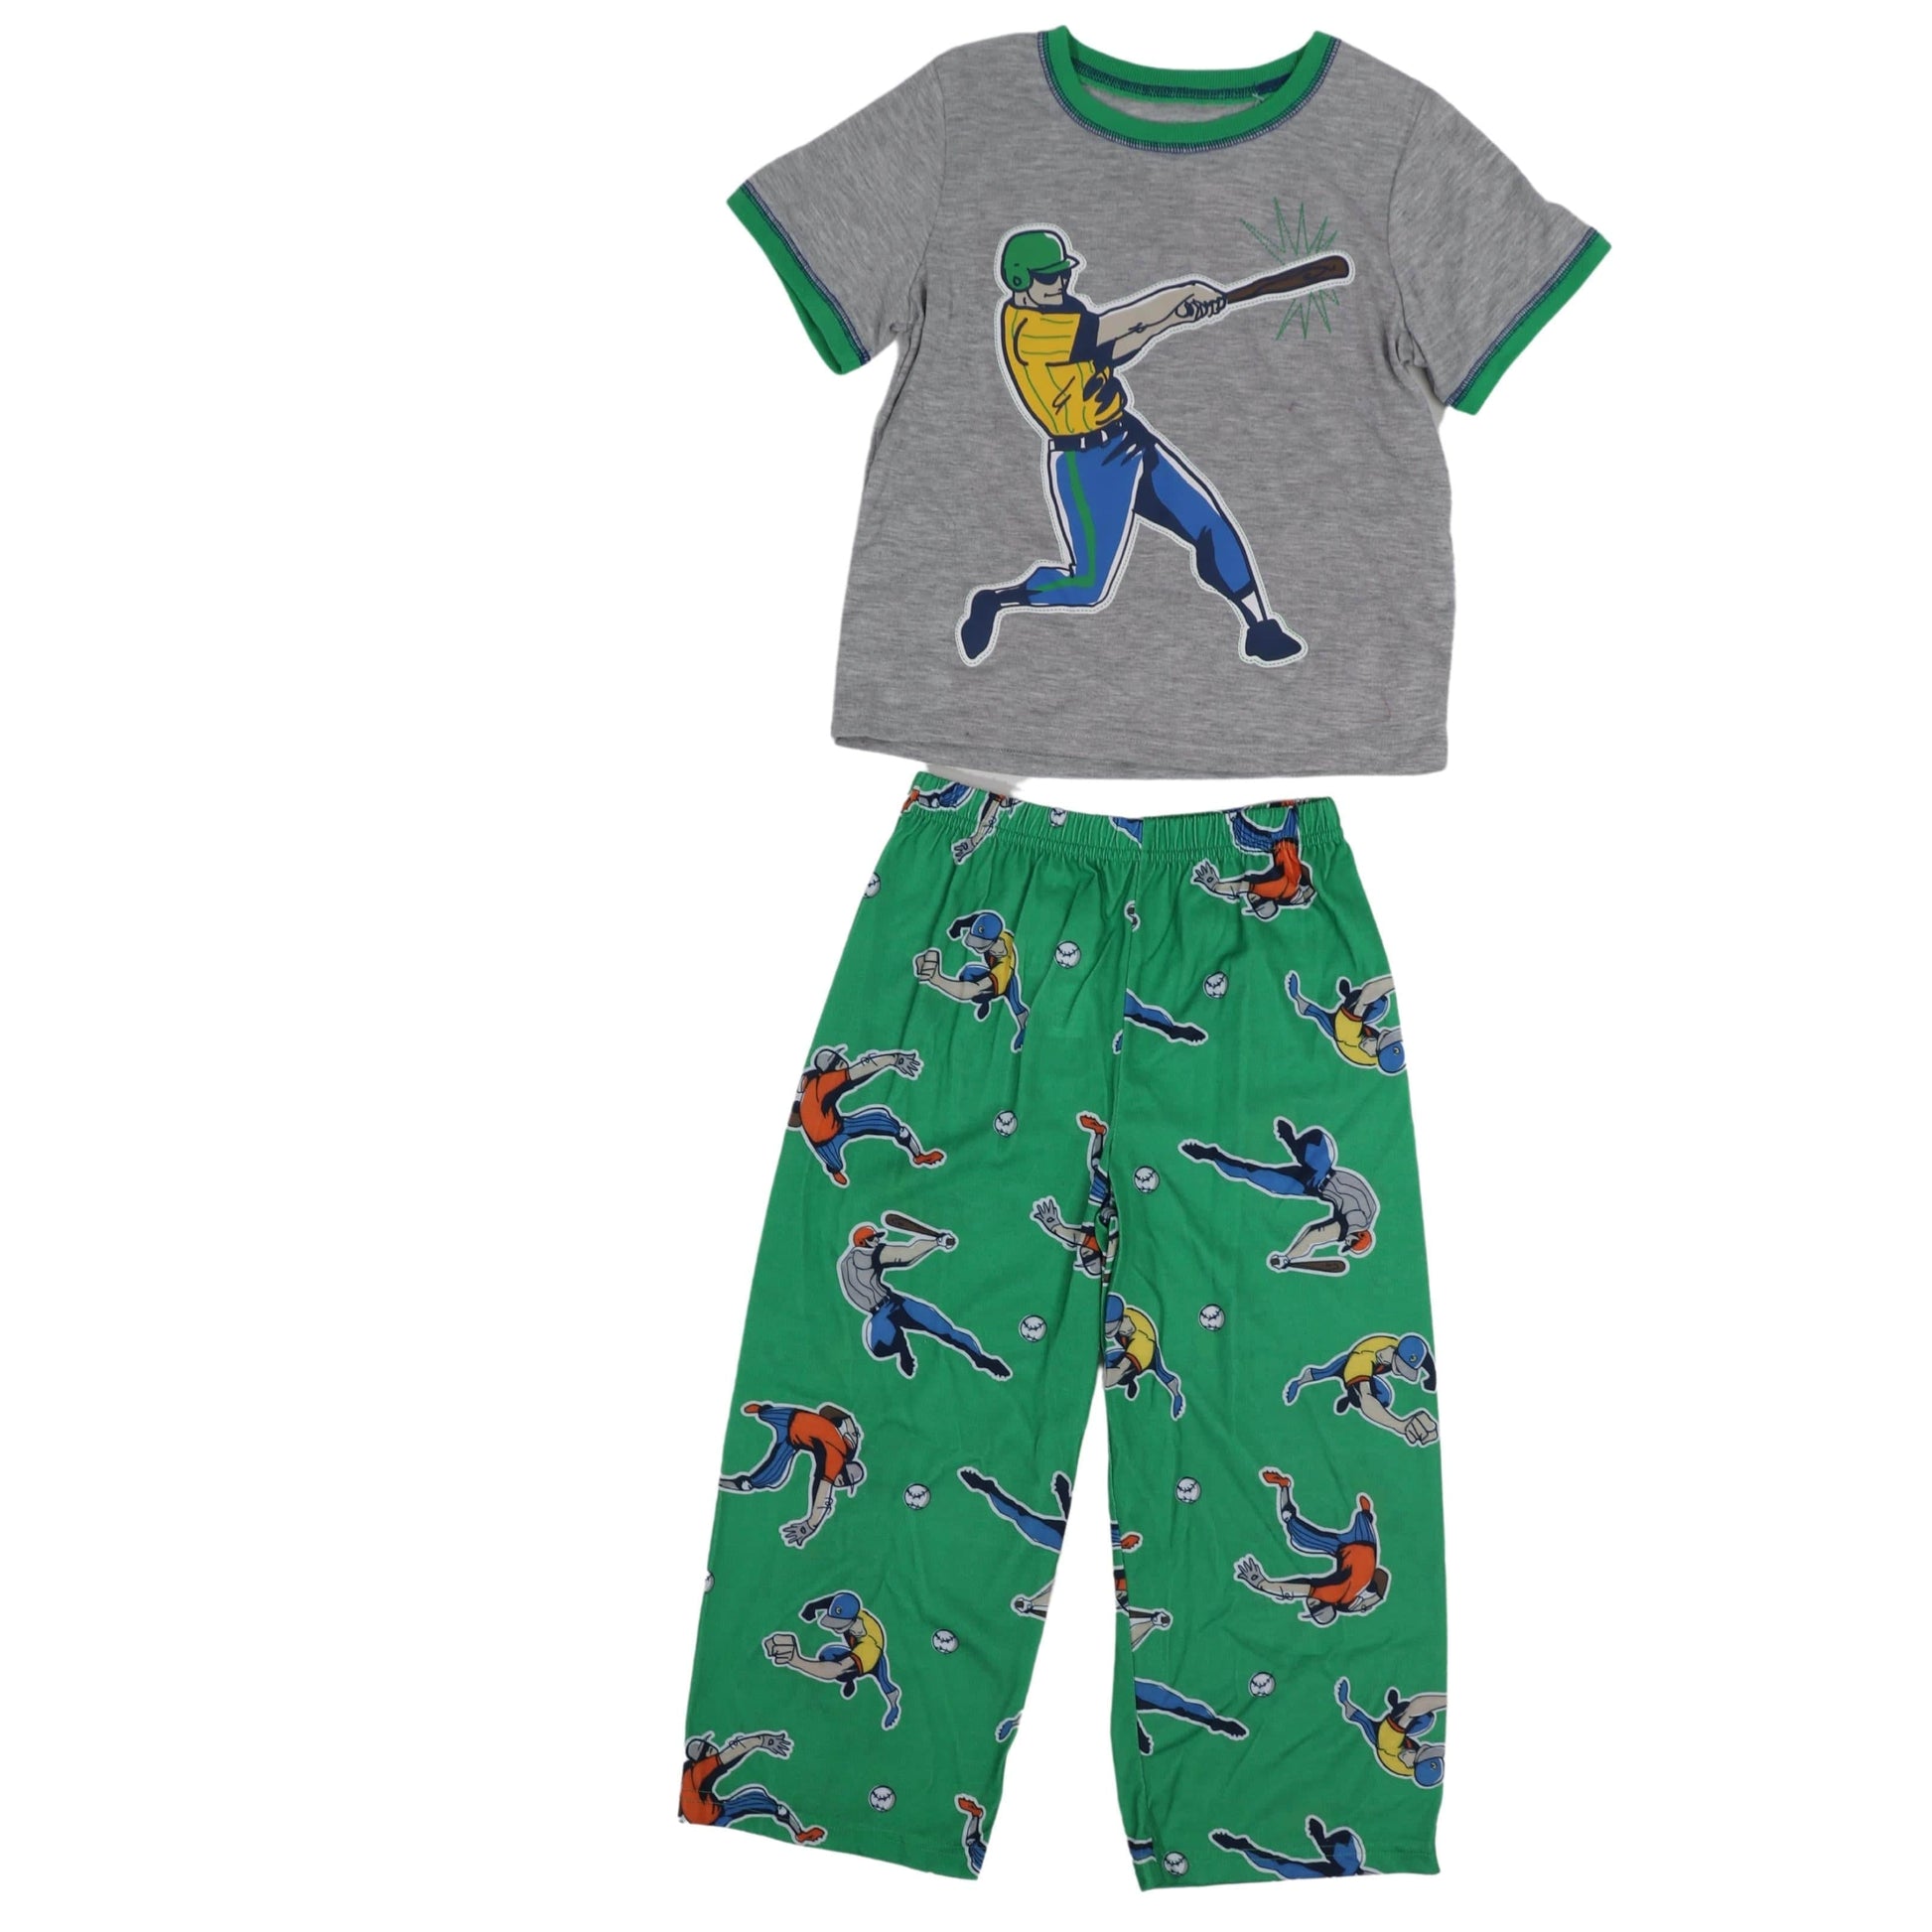 CARTER'S Boys Pajamas 5 Years / Green CARTER'S - Casual Pajama Set